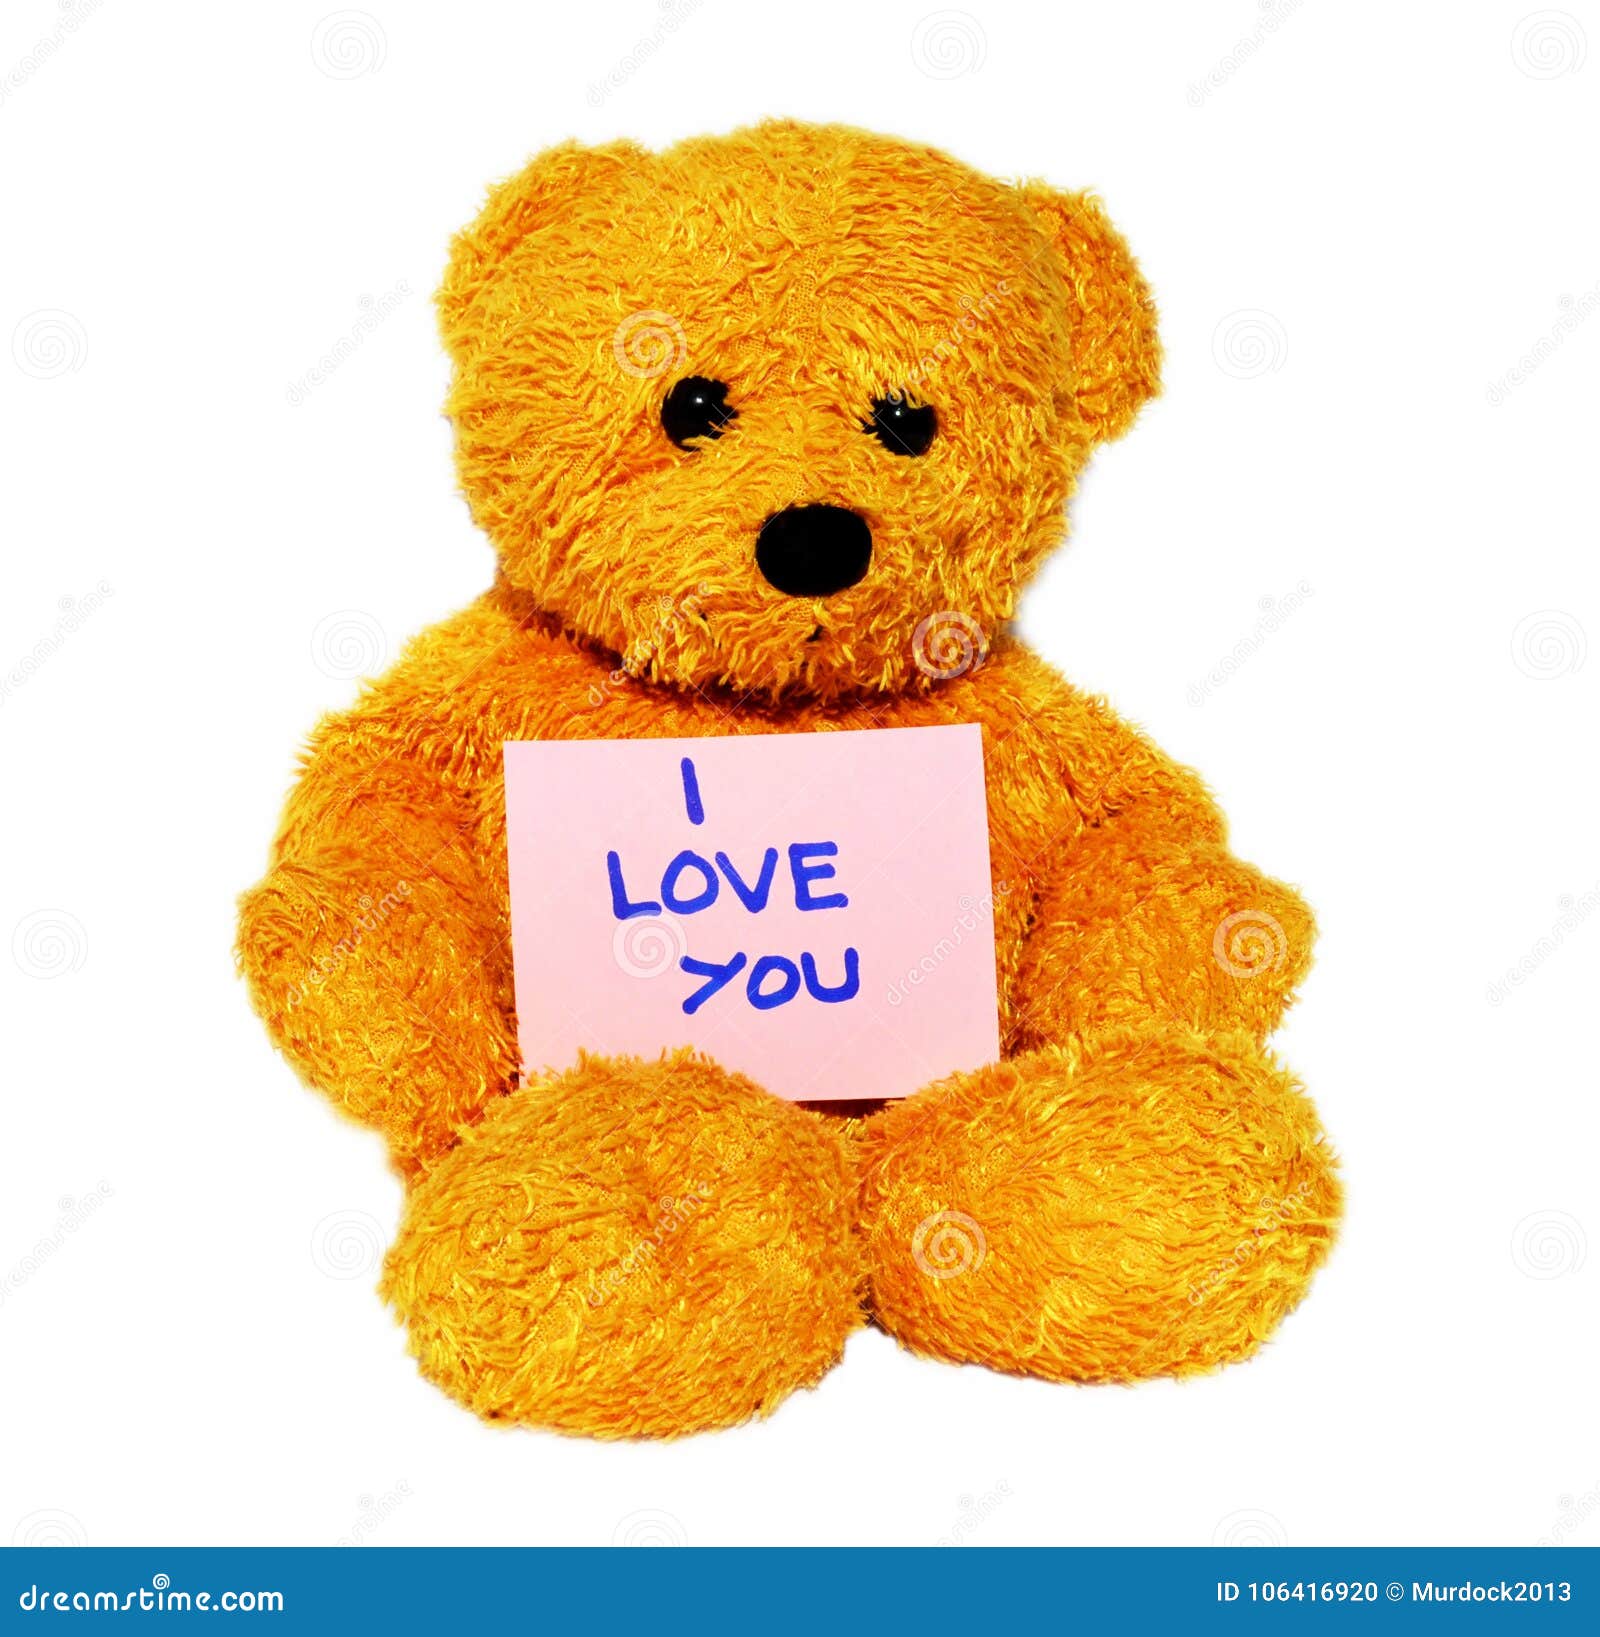 I love you teddy bear stock photo. Image of childhood - 106416920